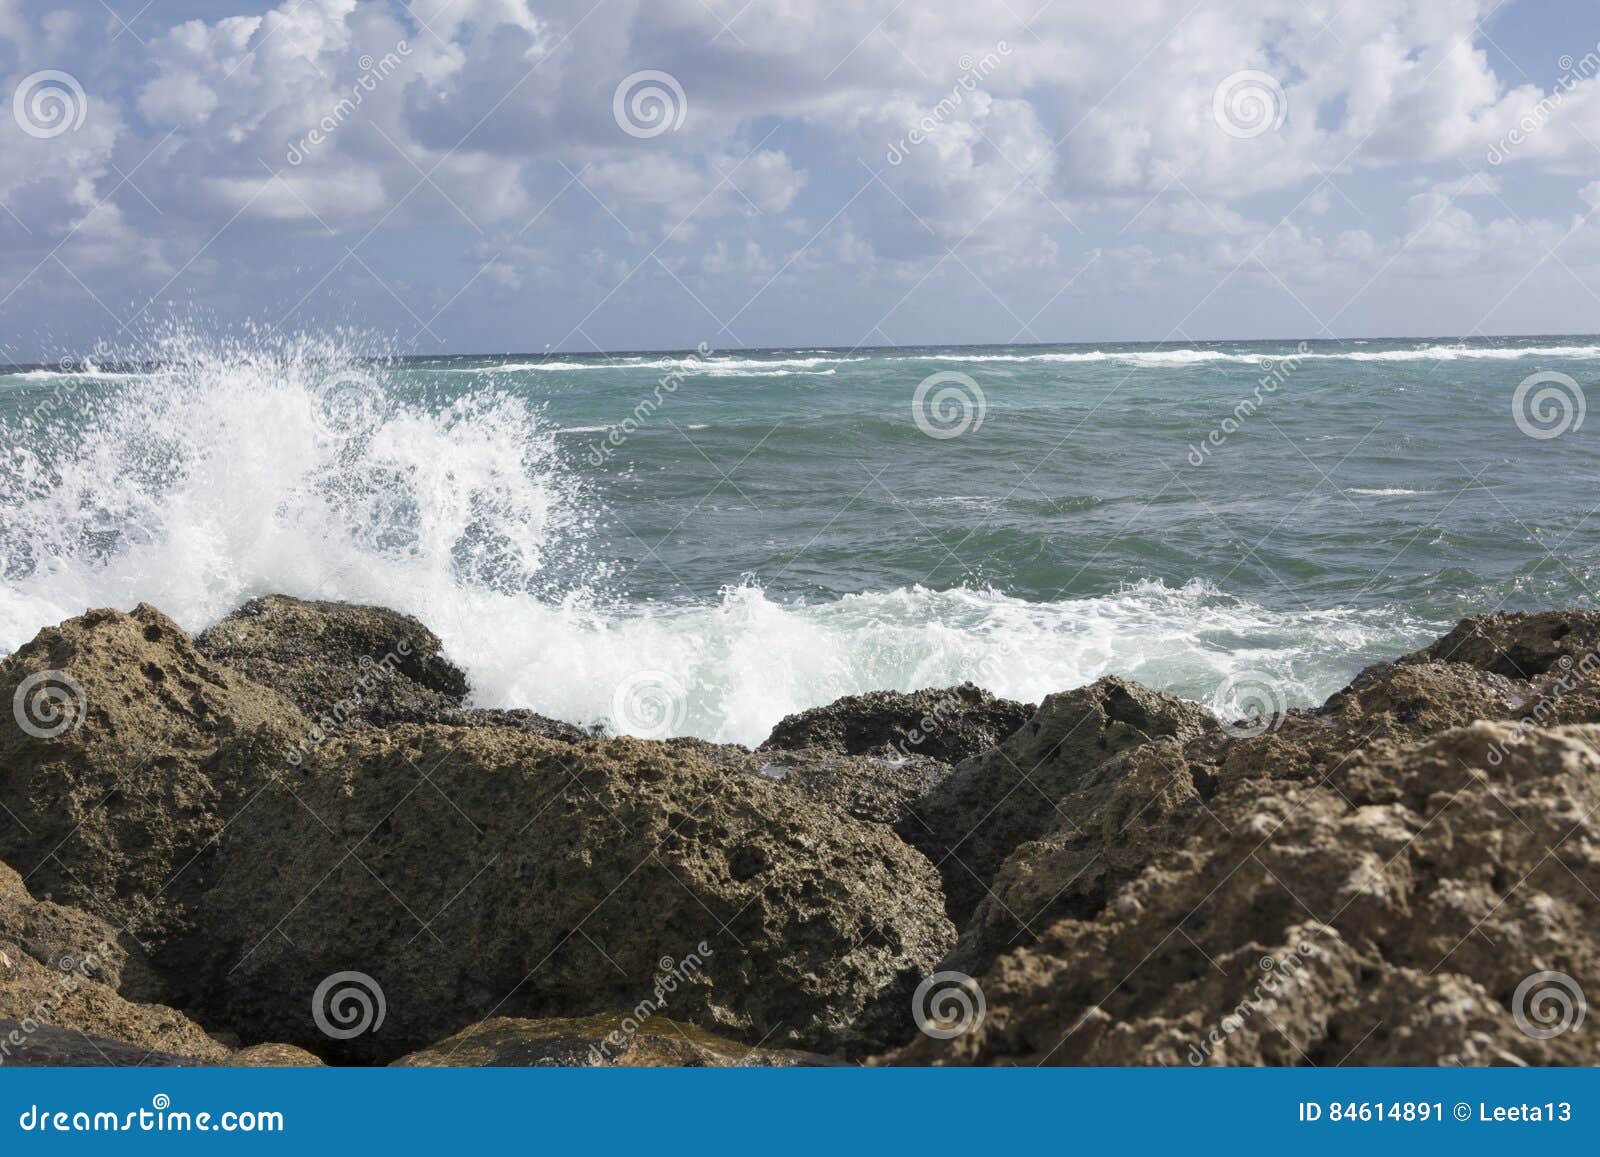 surf crashing on sea wall south inlet park boca raton florida